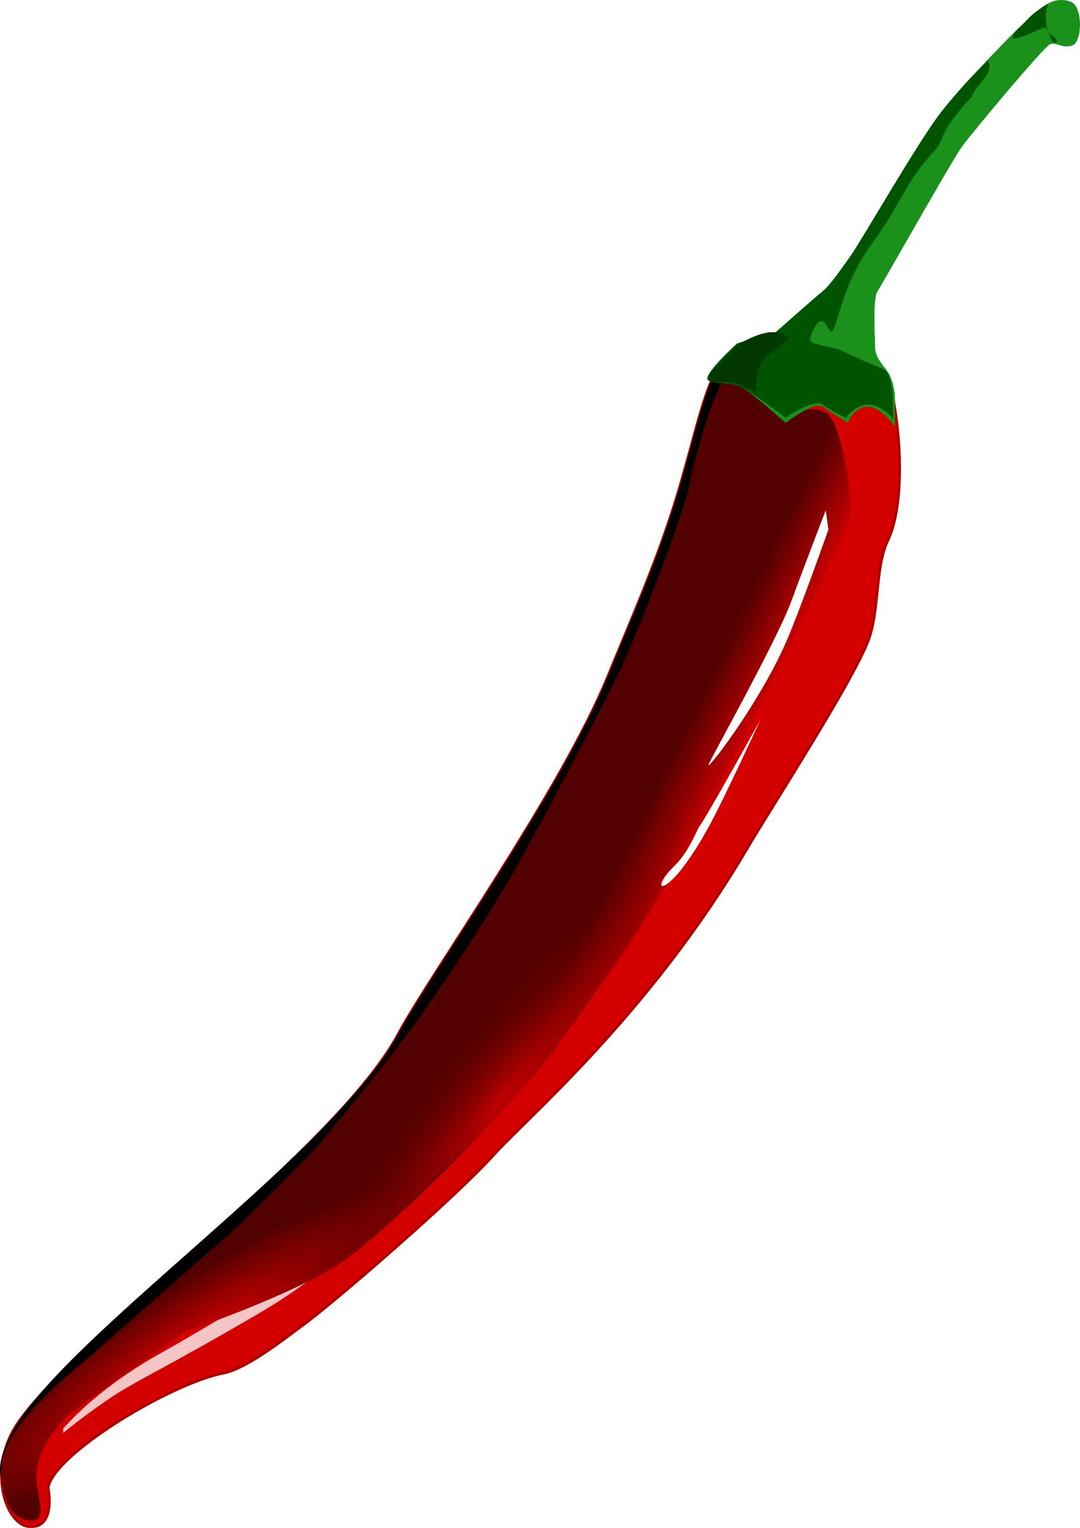 Chili pepper png transparent